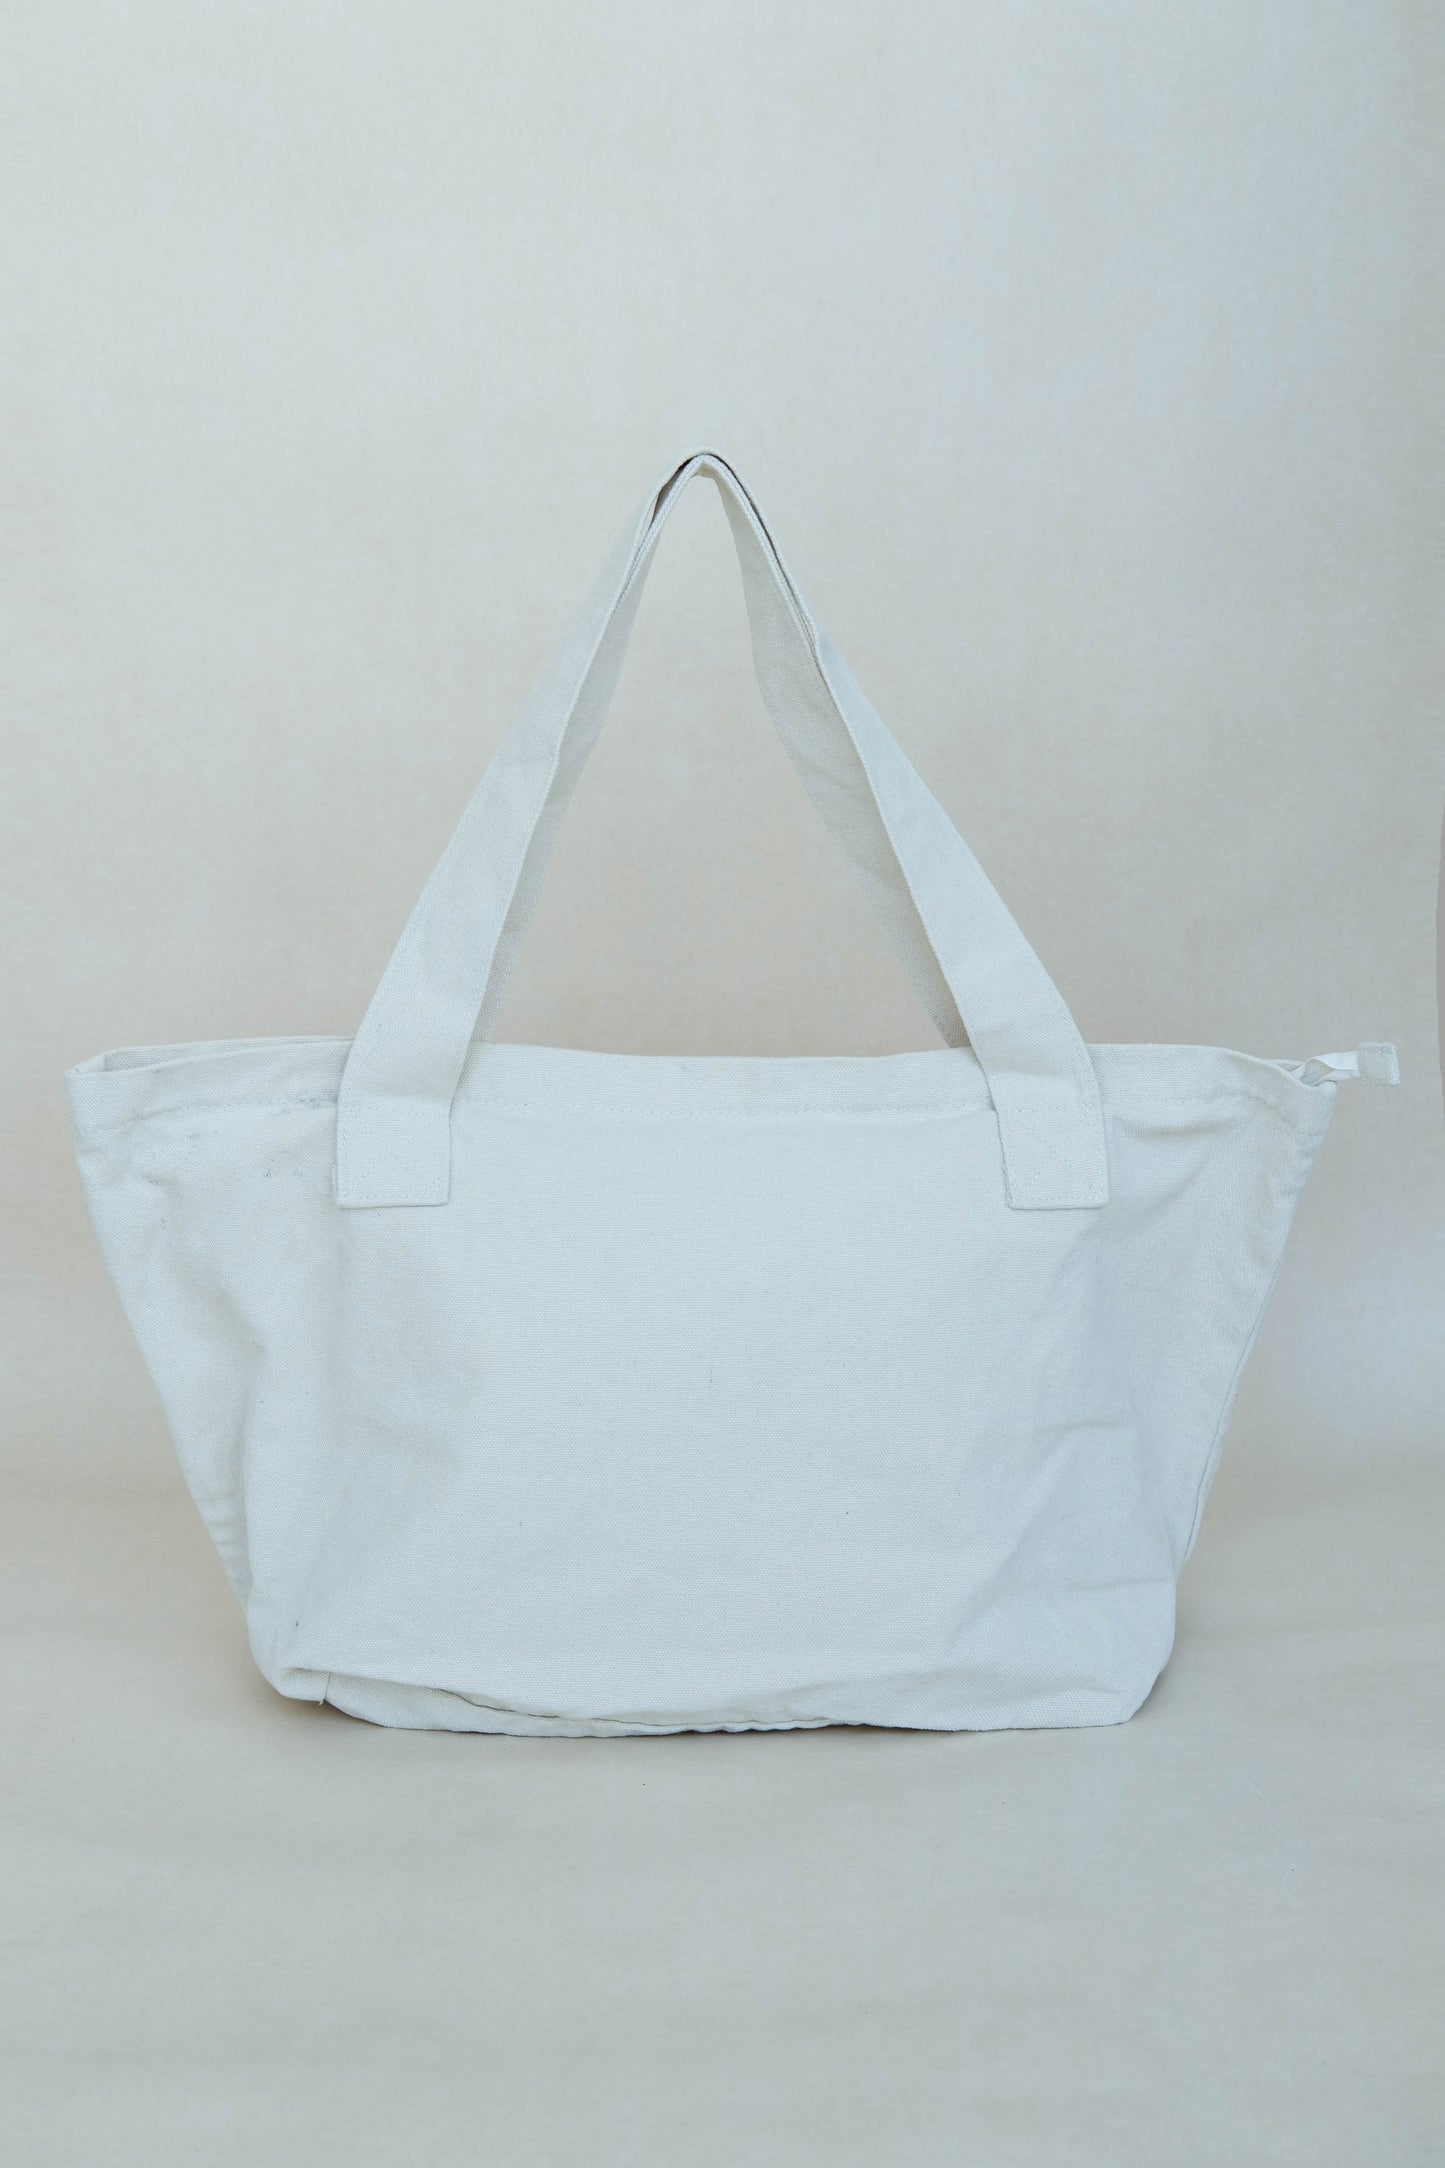 Tote shoulder bag in cream white